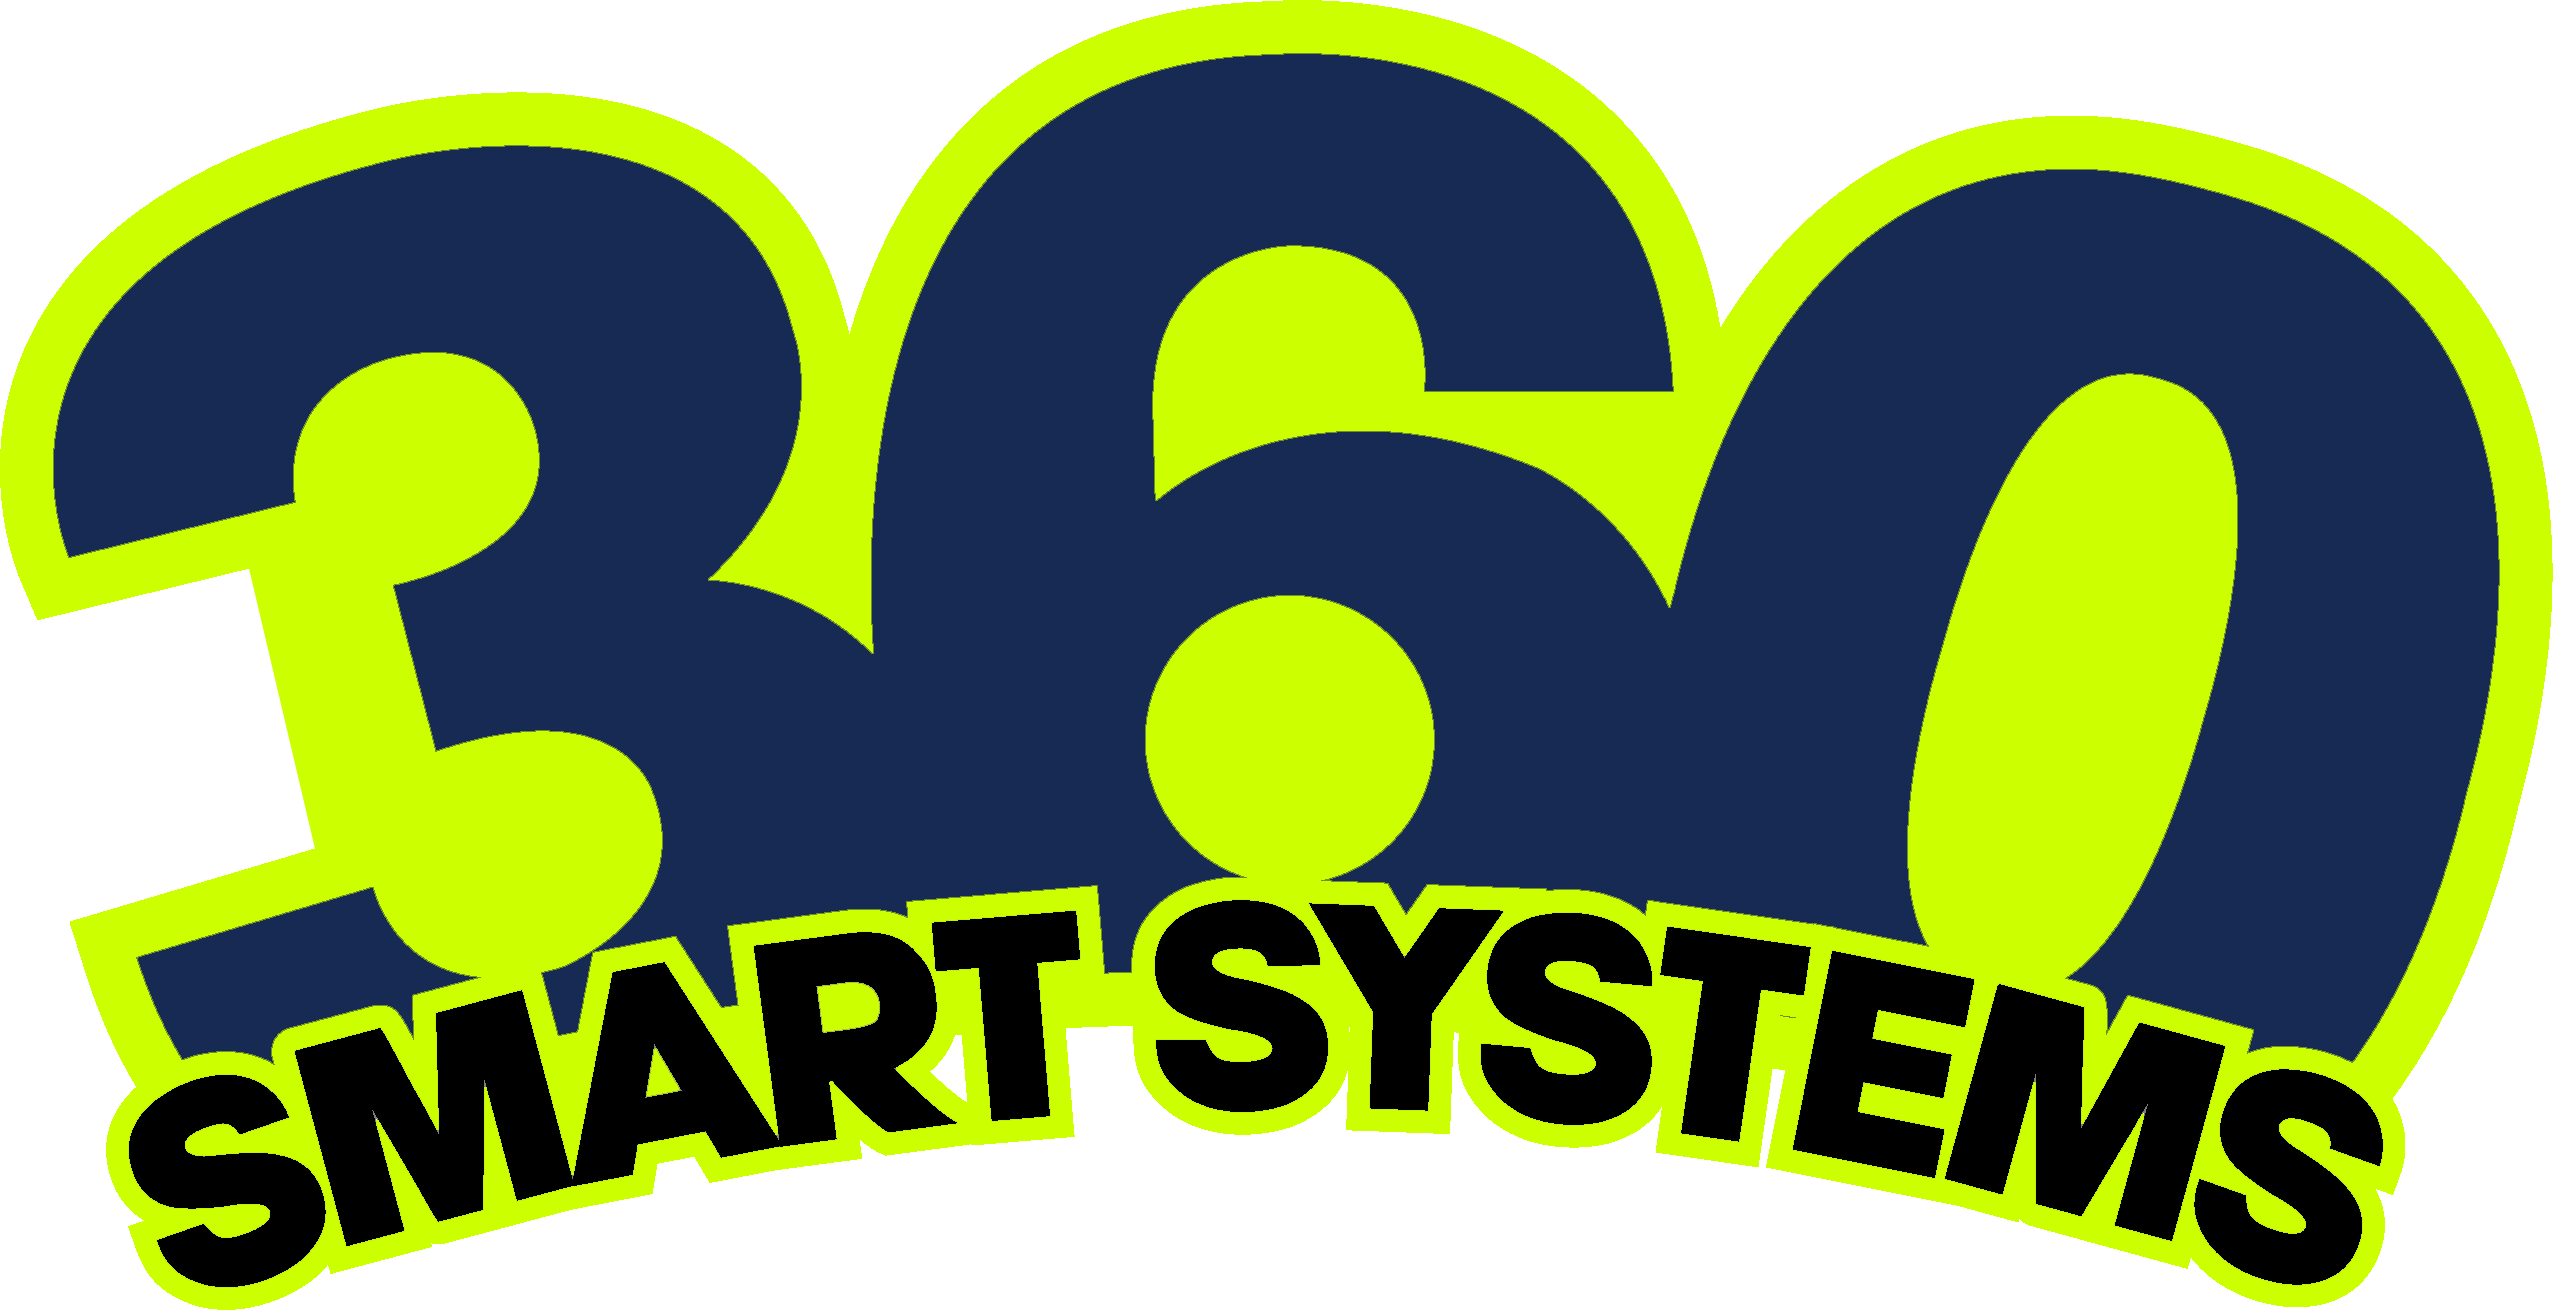 360 Smart Systems Logo